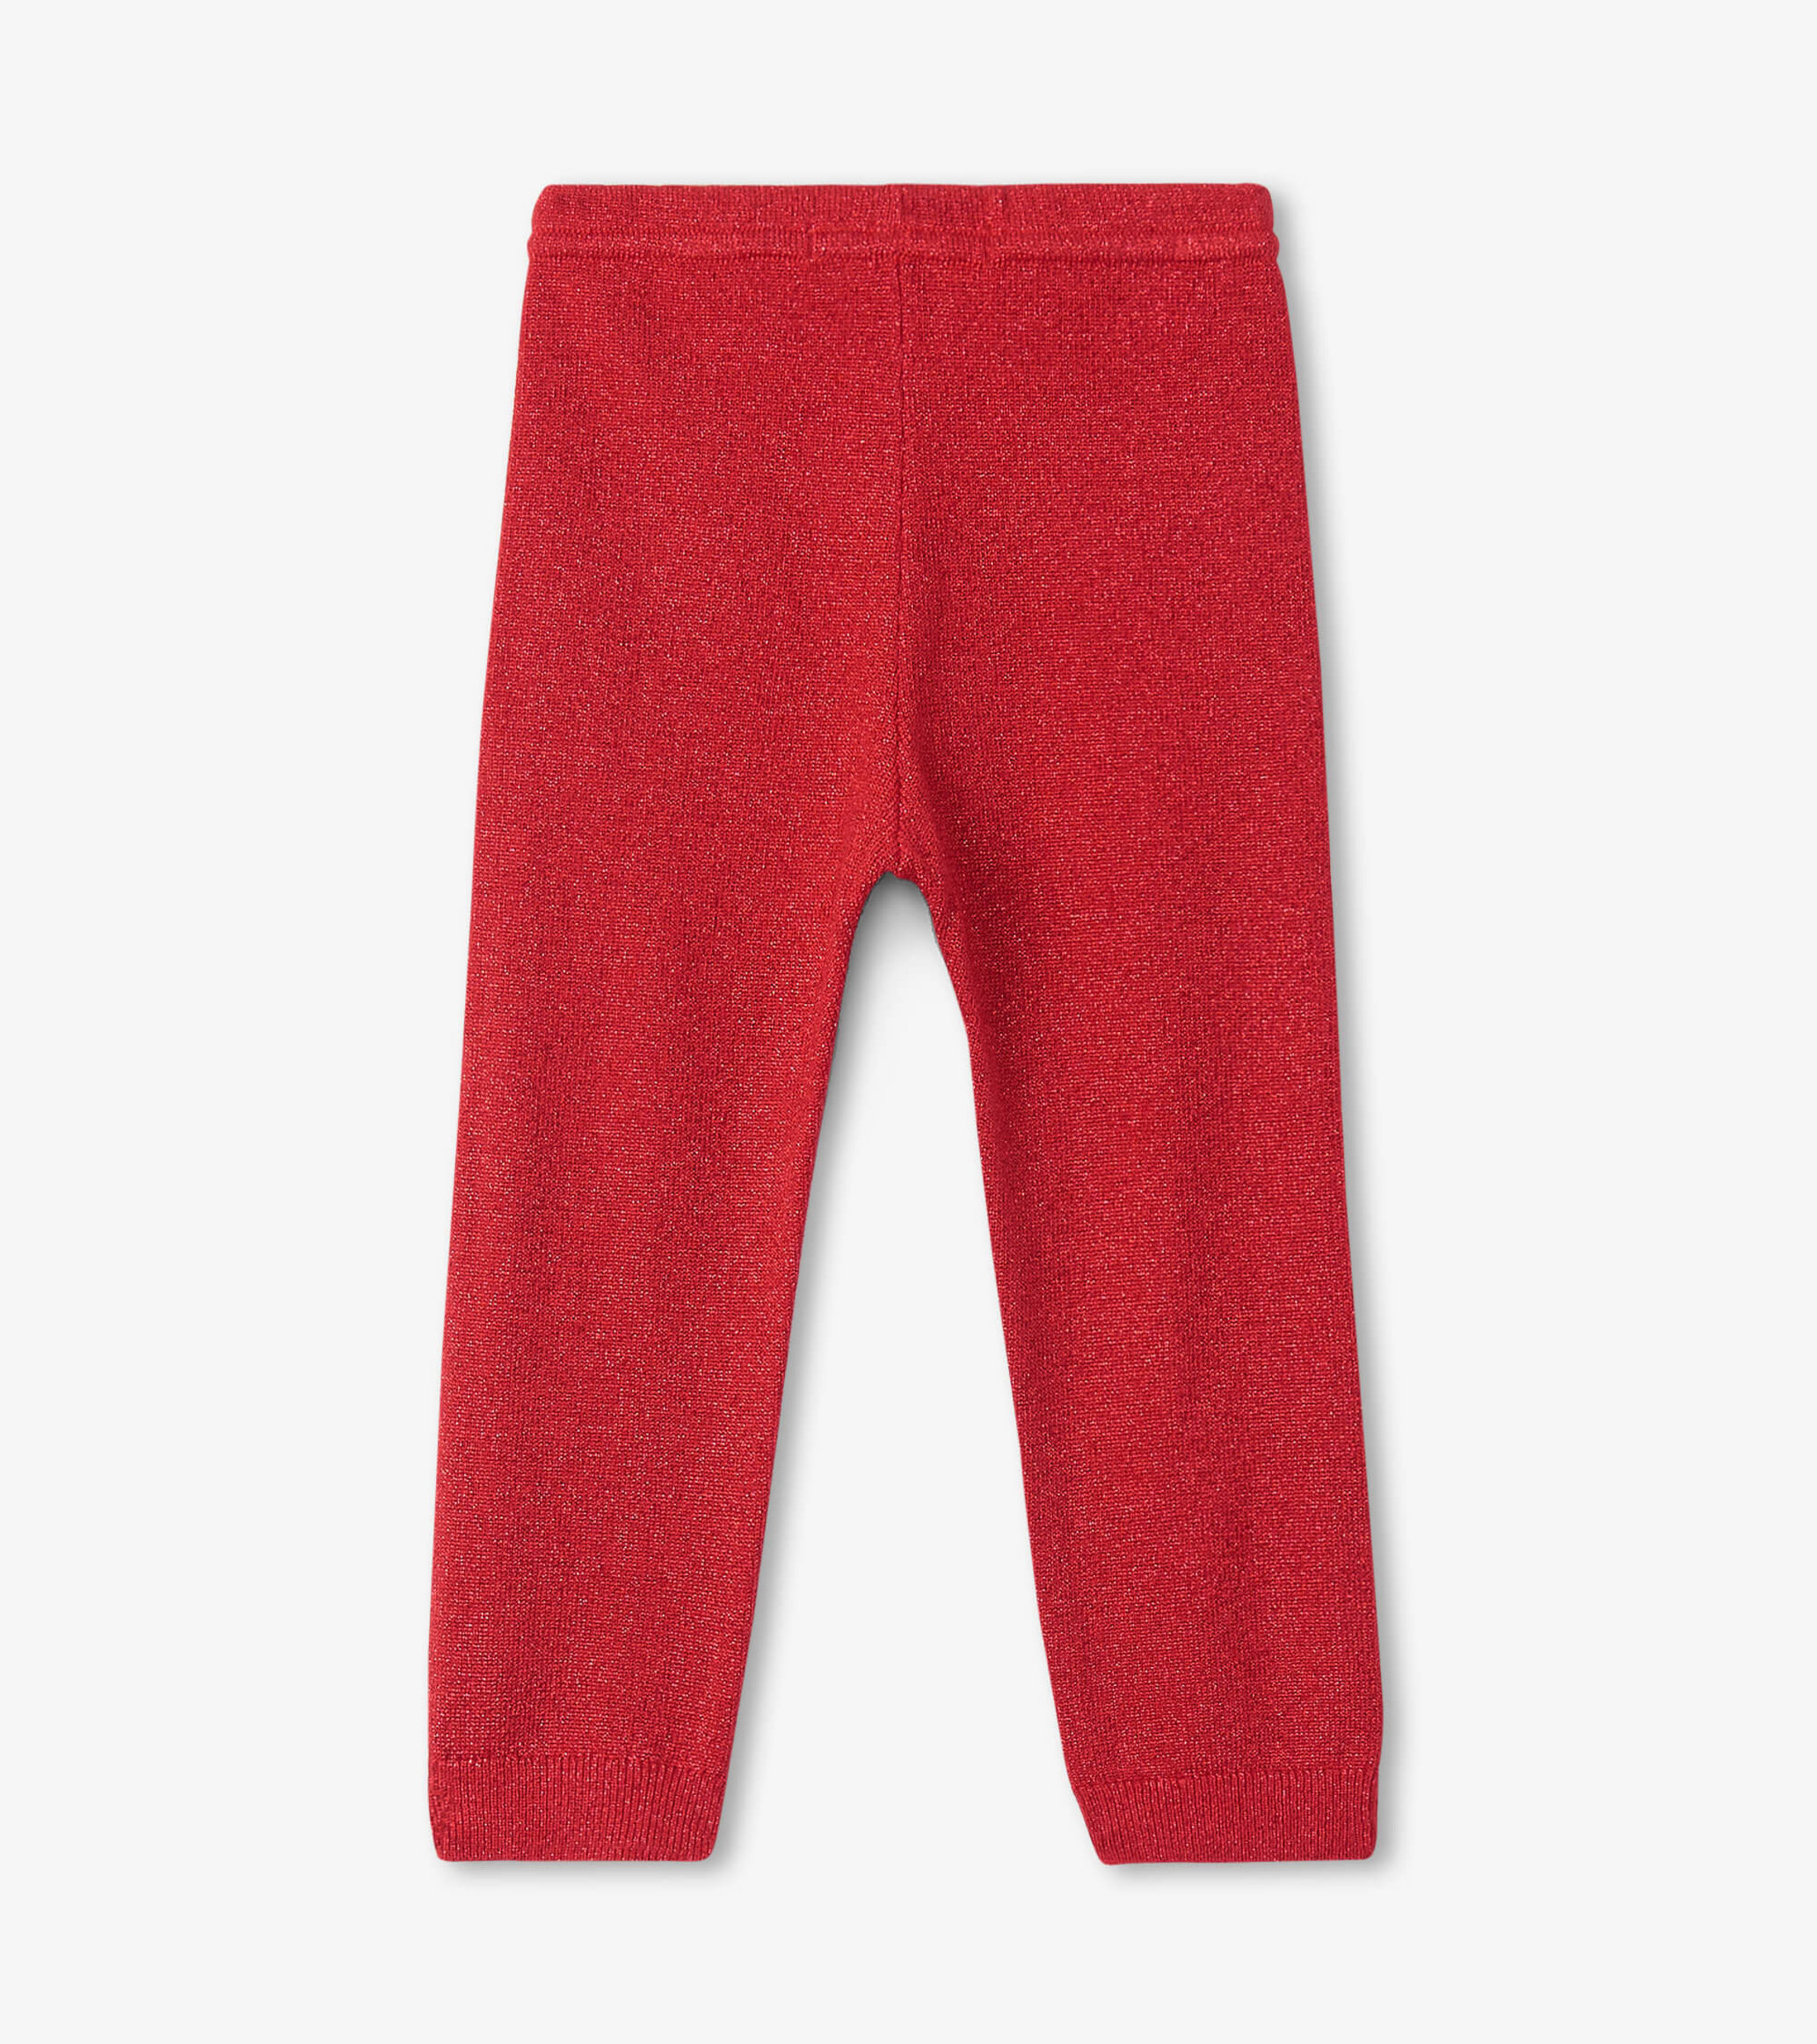 Leggings - Red/Glittery - Kids | H&M IN